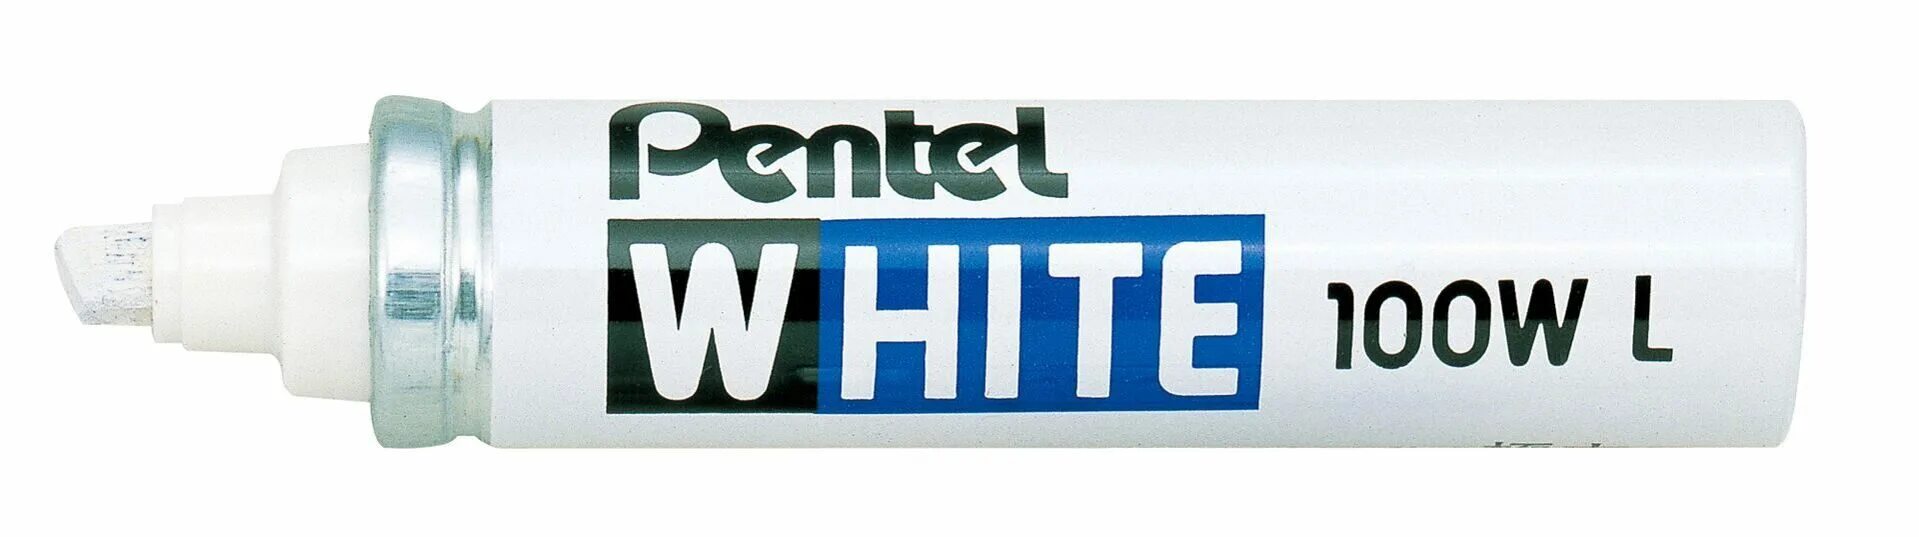 Маркер Pentel White 100w белый. Маркер Pentel x100w. Маркер Pentel x100w белый перманентный. Маркер промышленный Pentel White р-266. Маркеры white